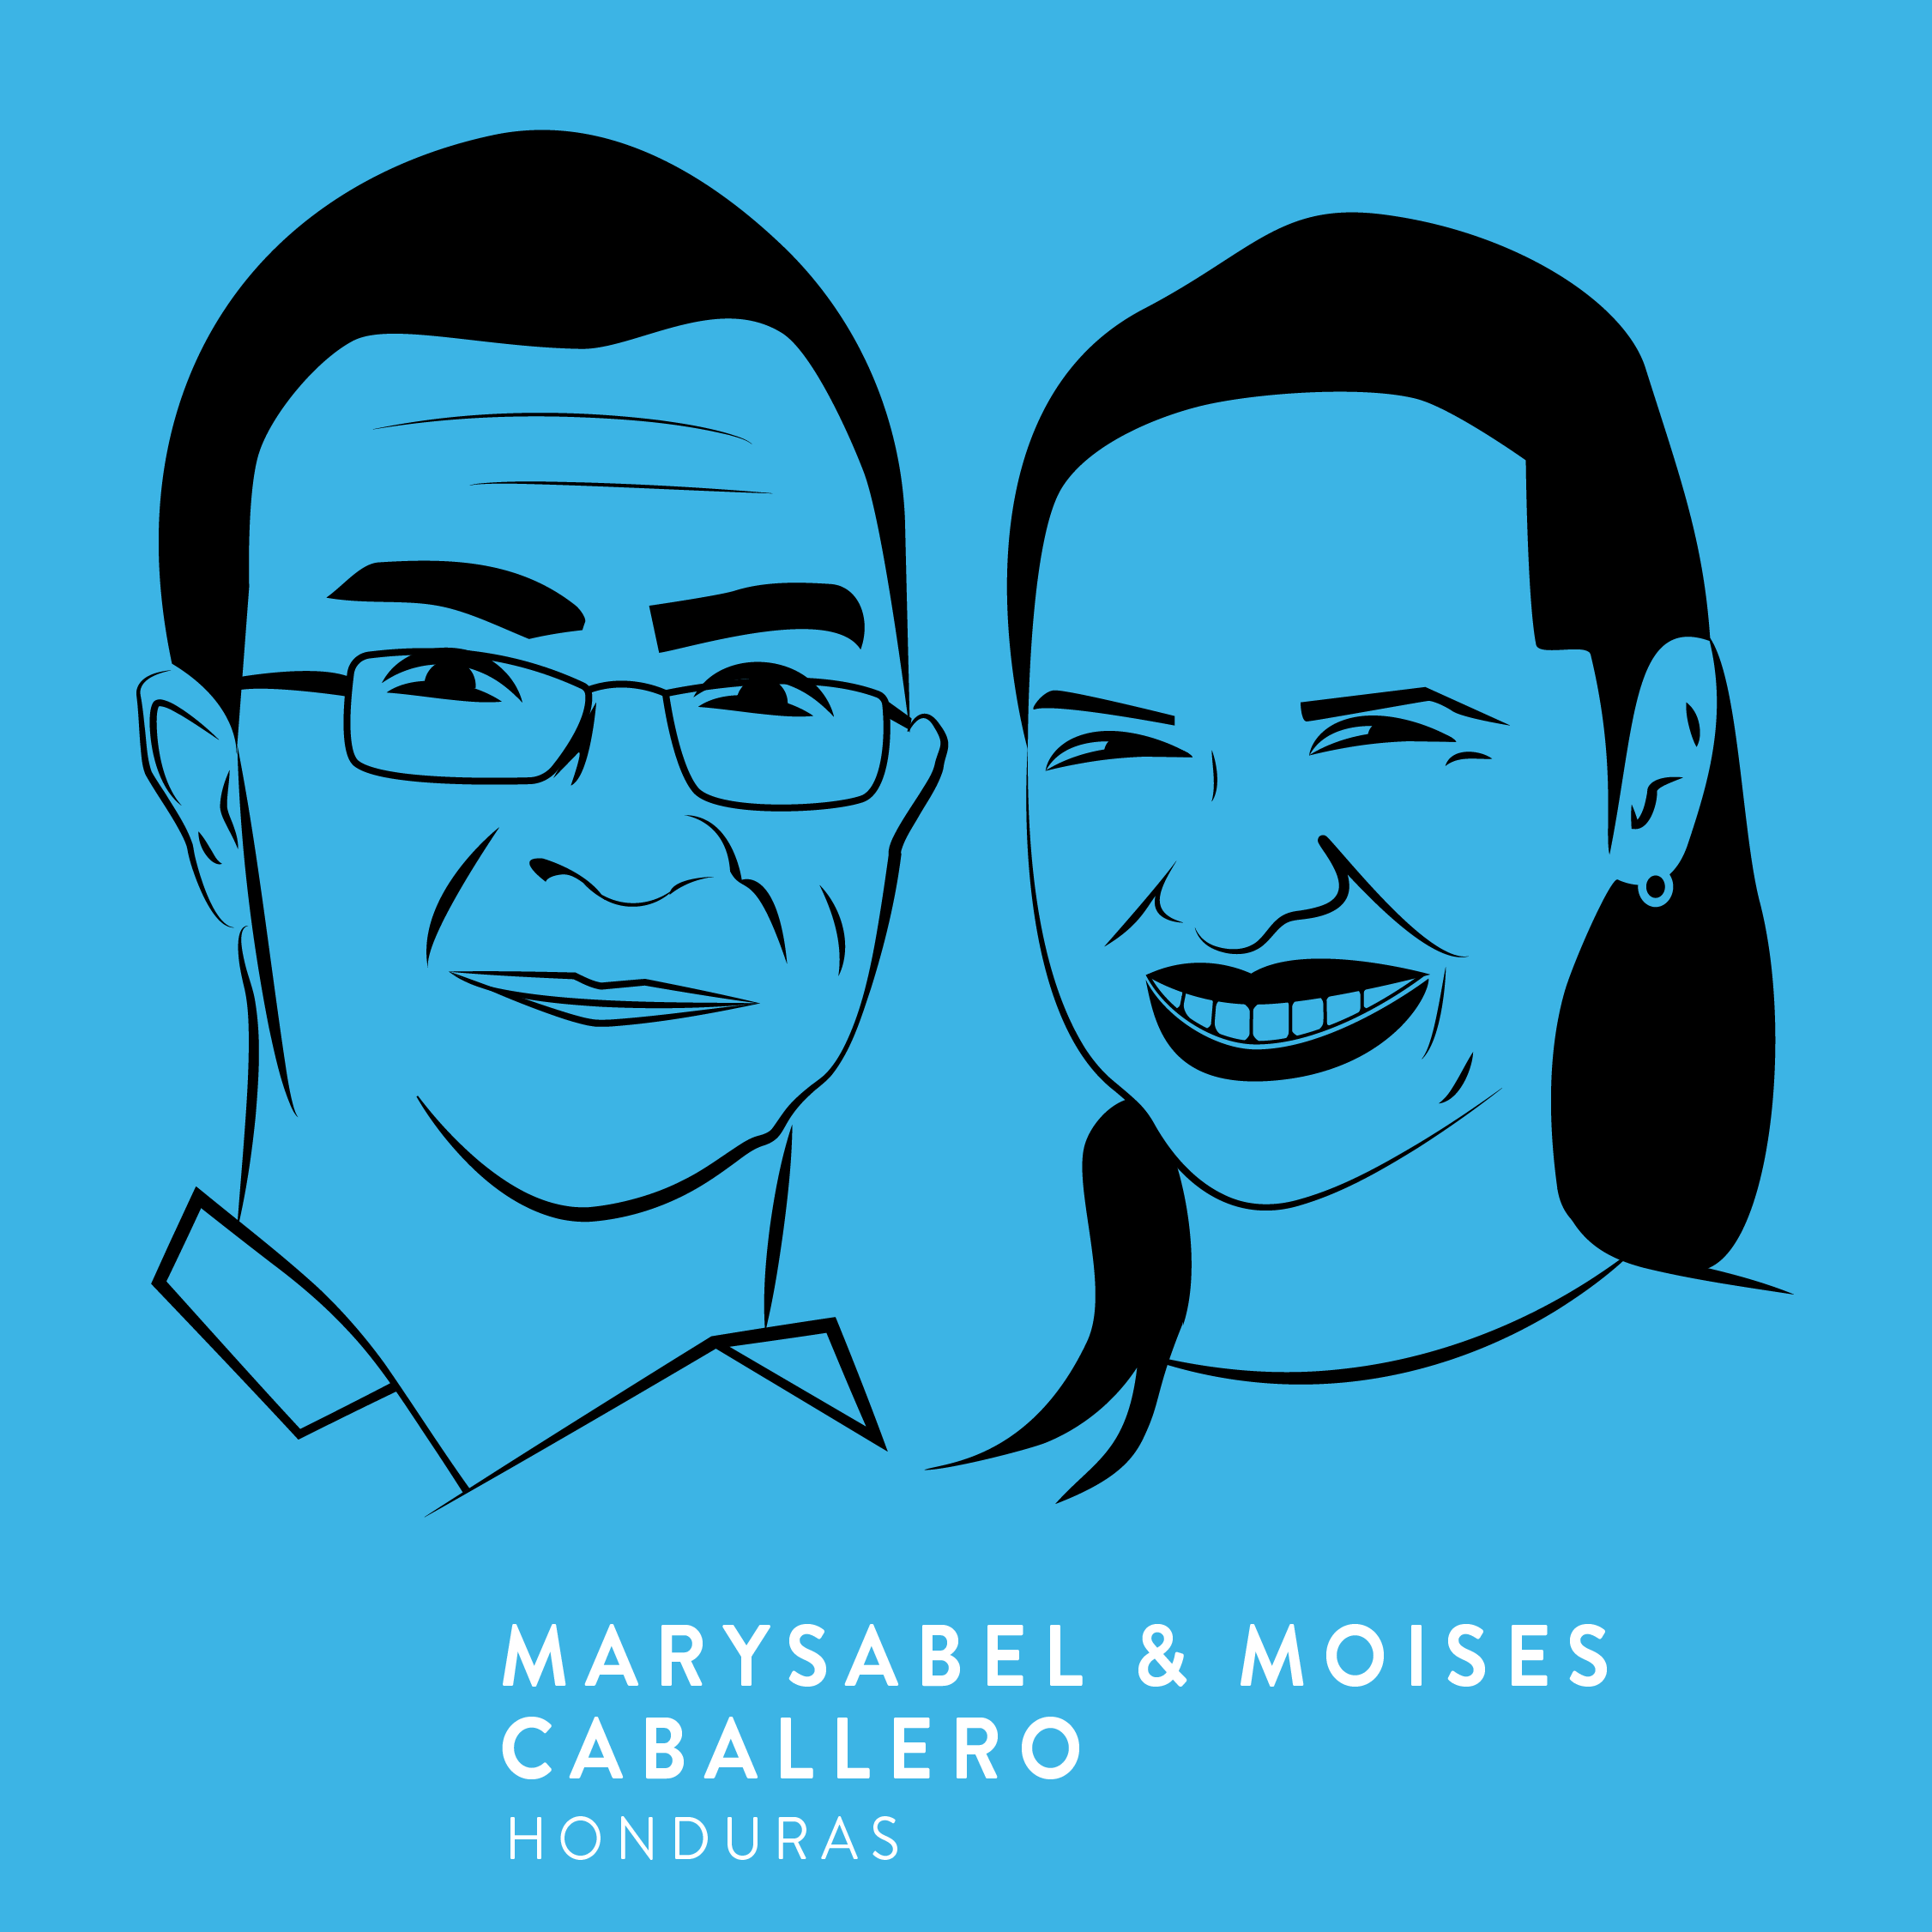 Meet Honduran coffee producers Marysabel and Moises Caballero of Finca El Puente